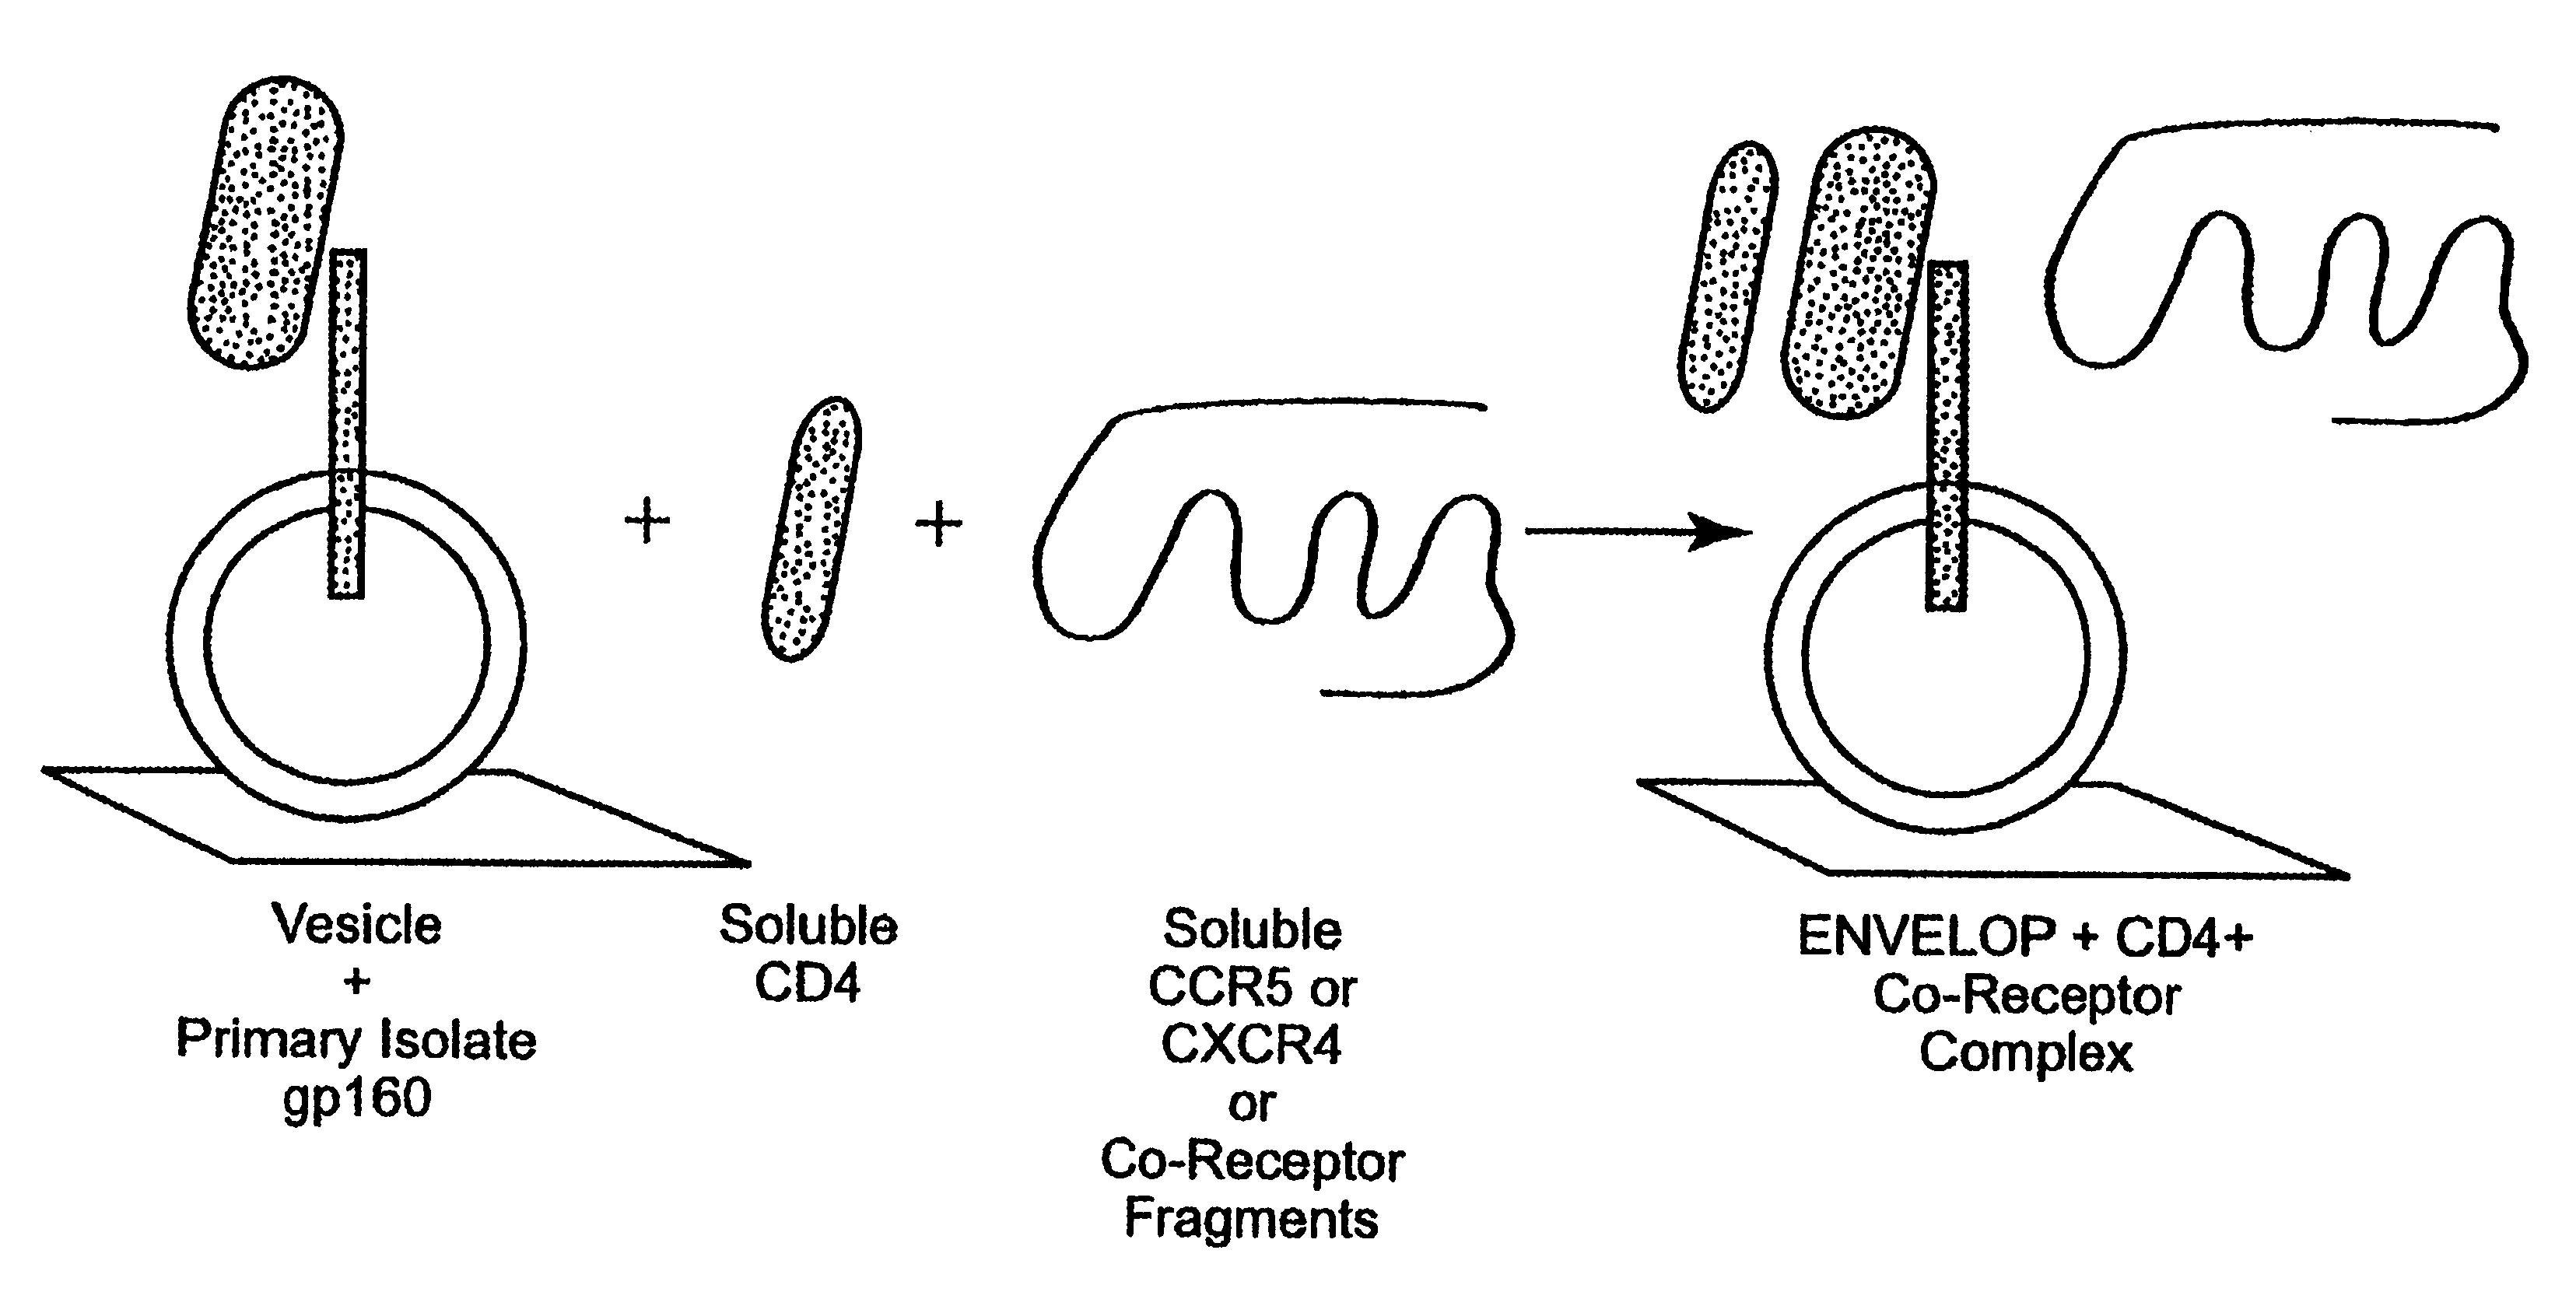 Immunogen comprising an HIV envelope protein, a ligand and H2 peptide